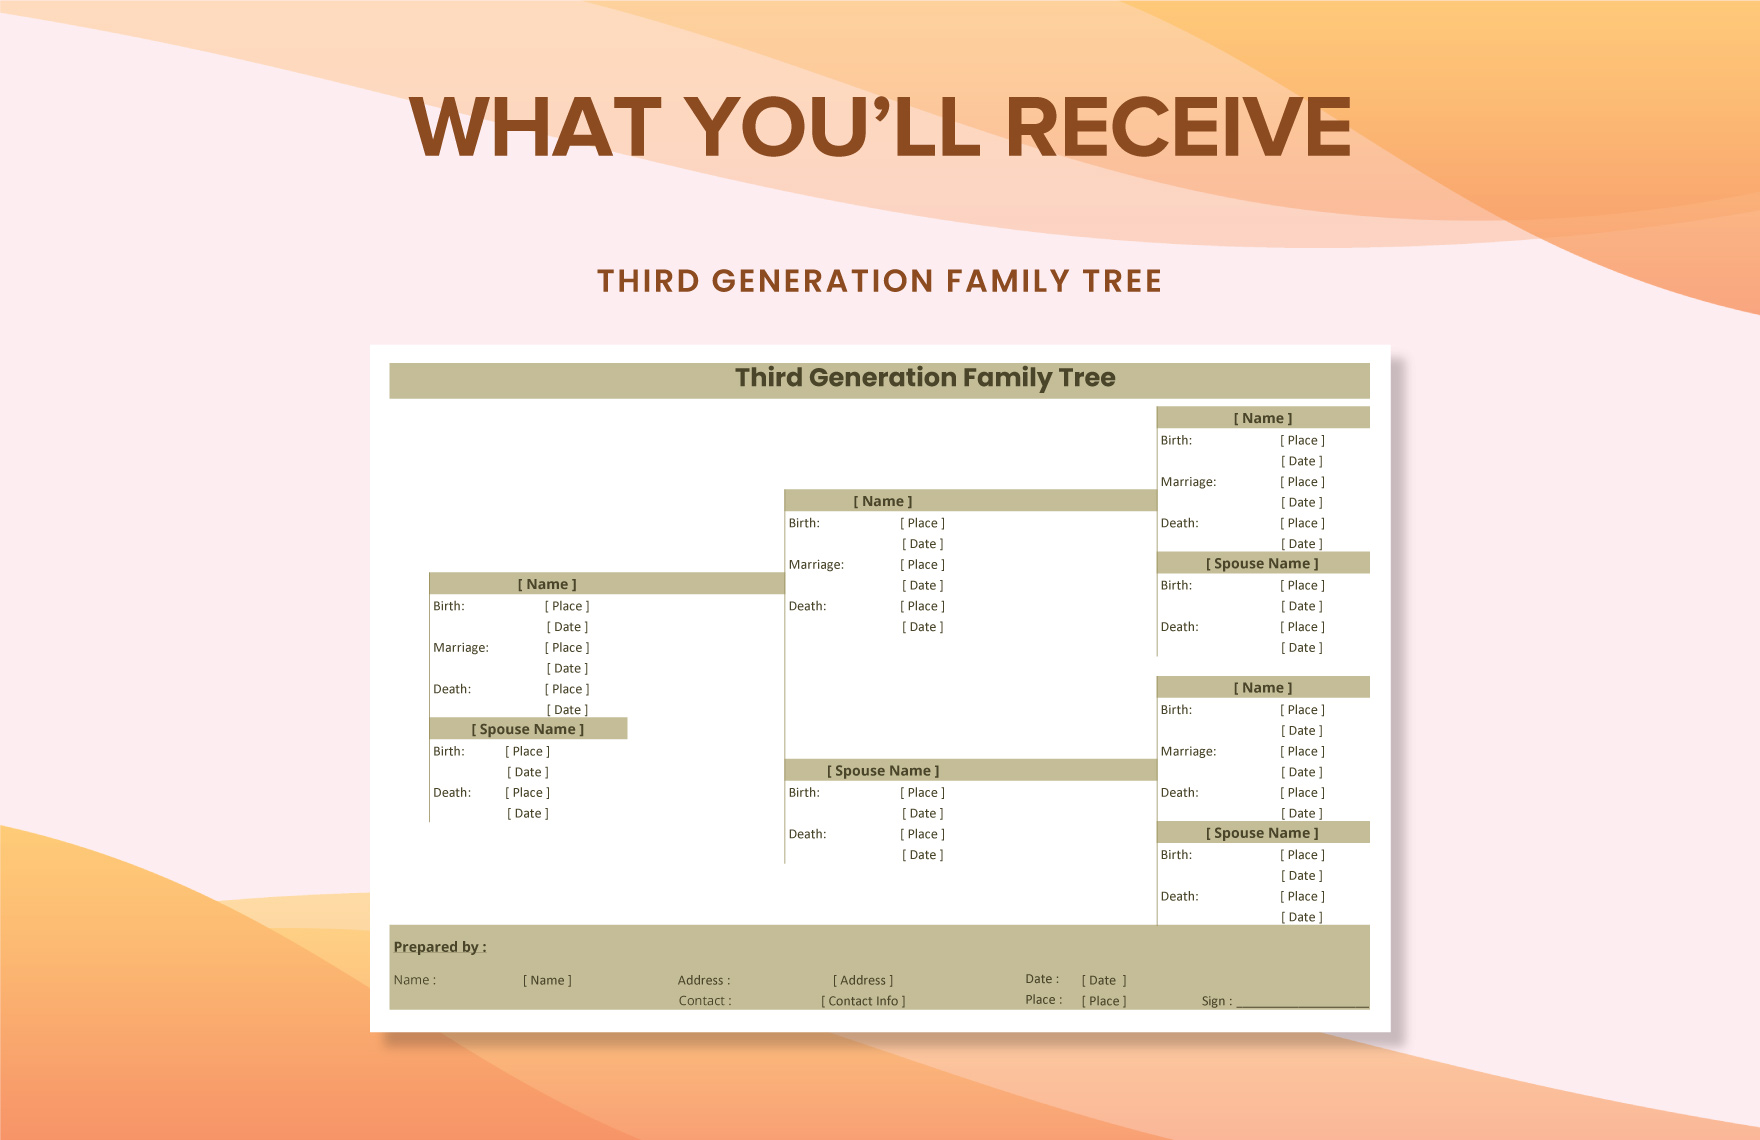 Third Generation Family Tree Template